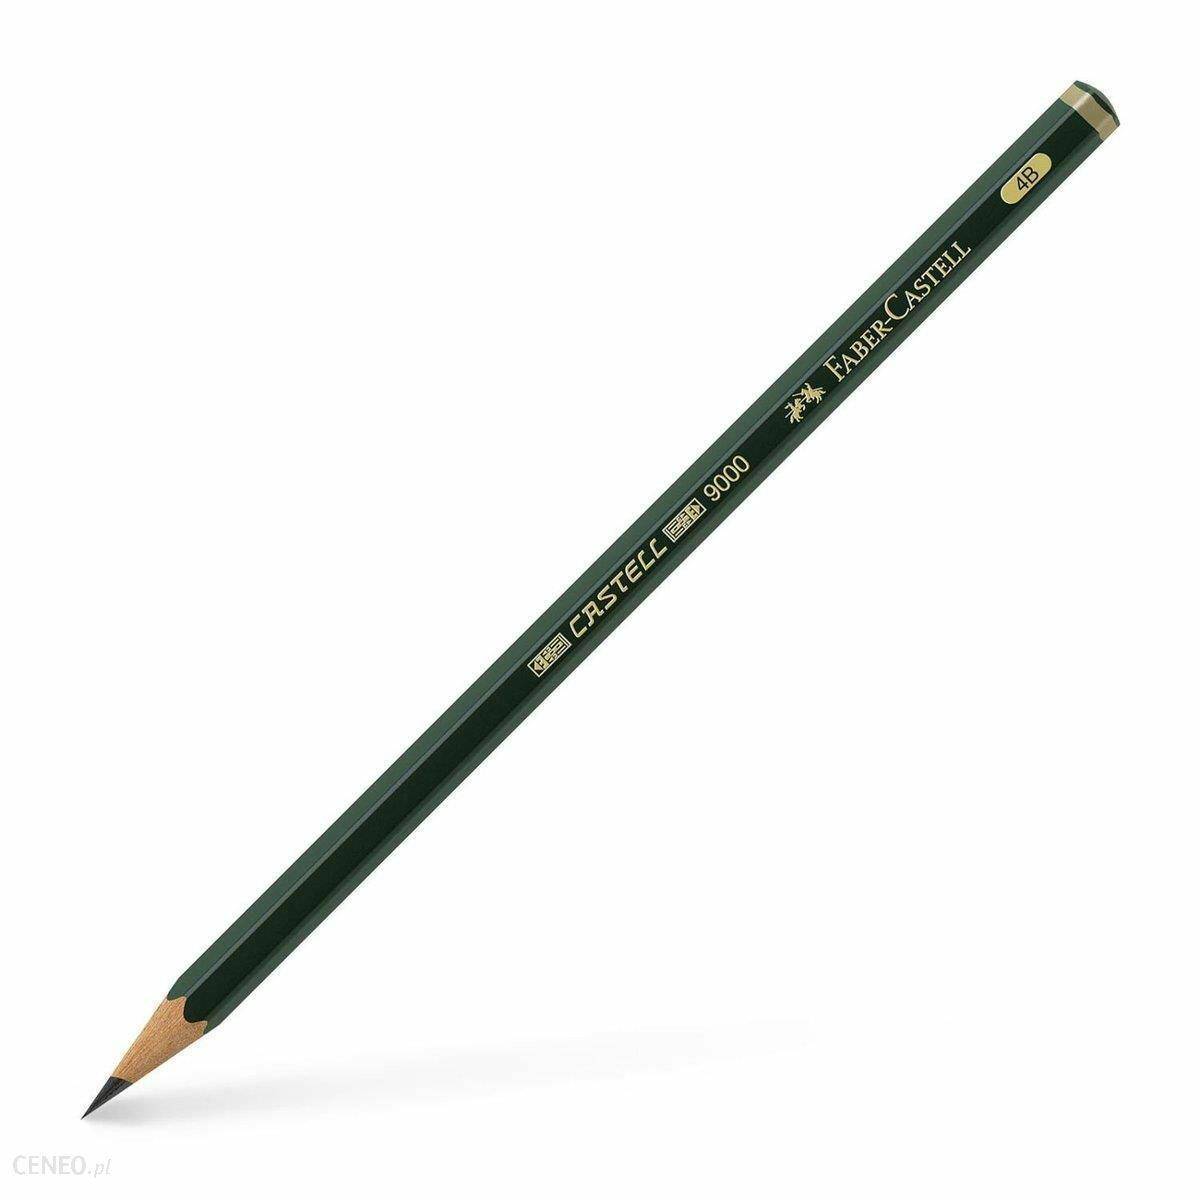 Ołówek 9000 4B Faber-Castell